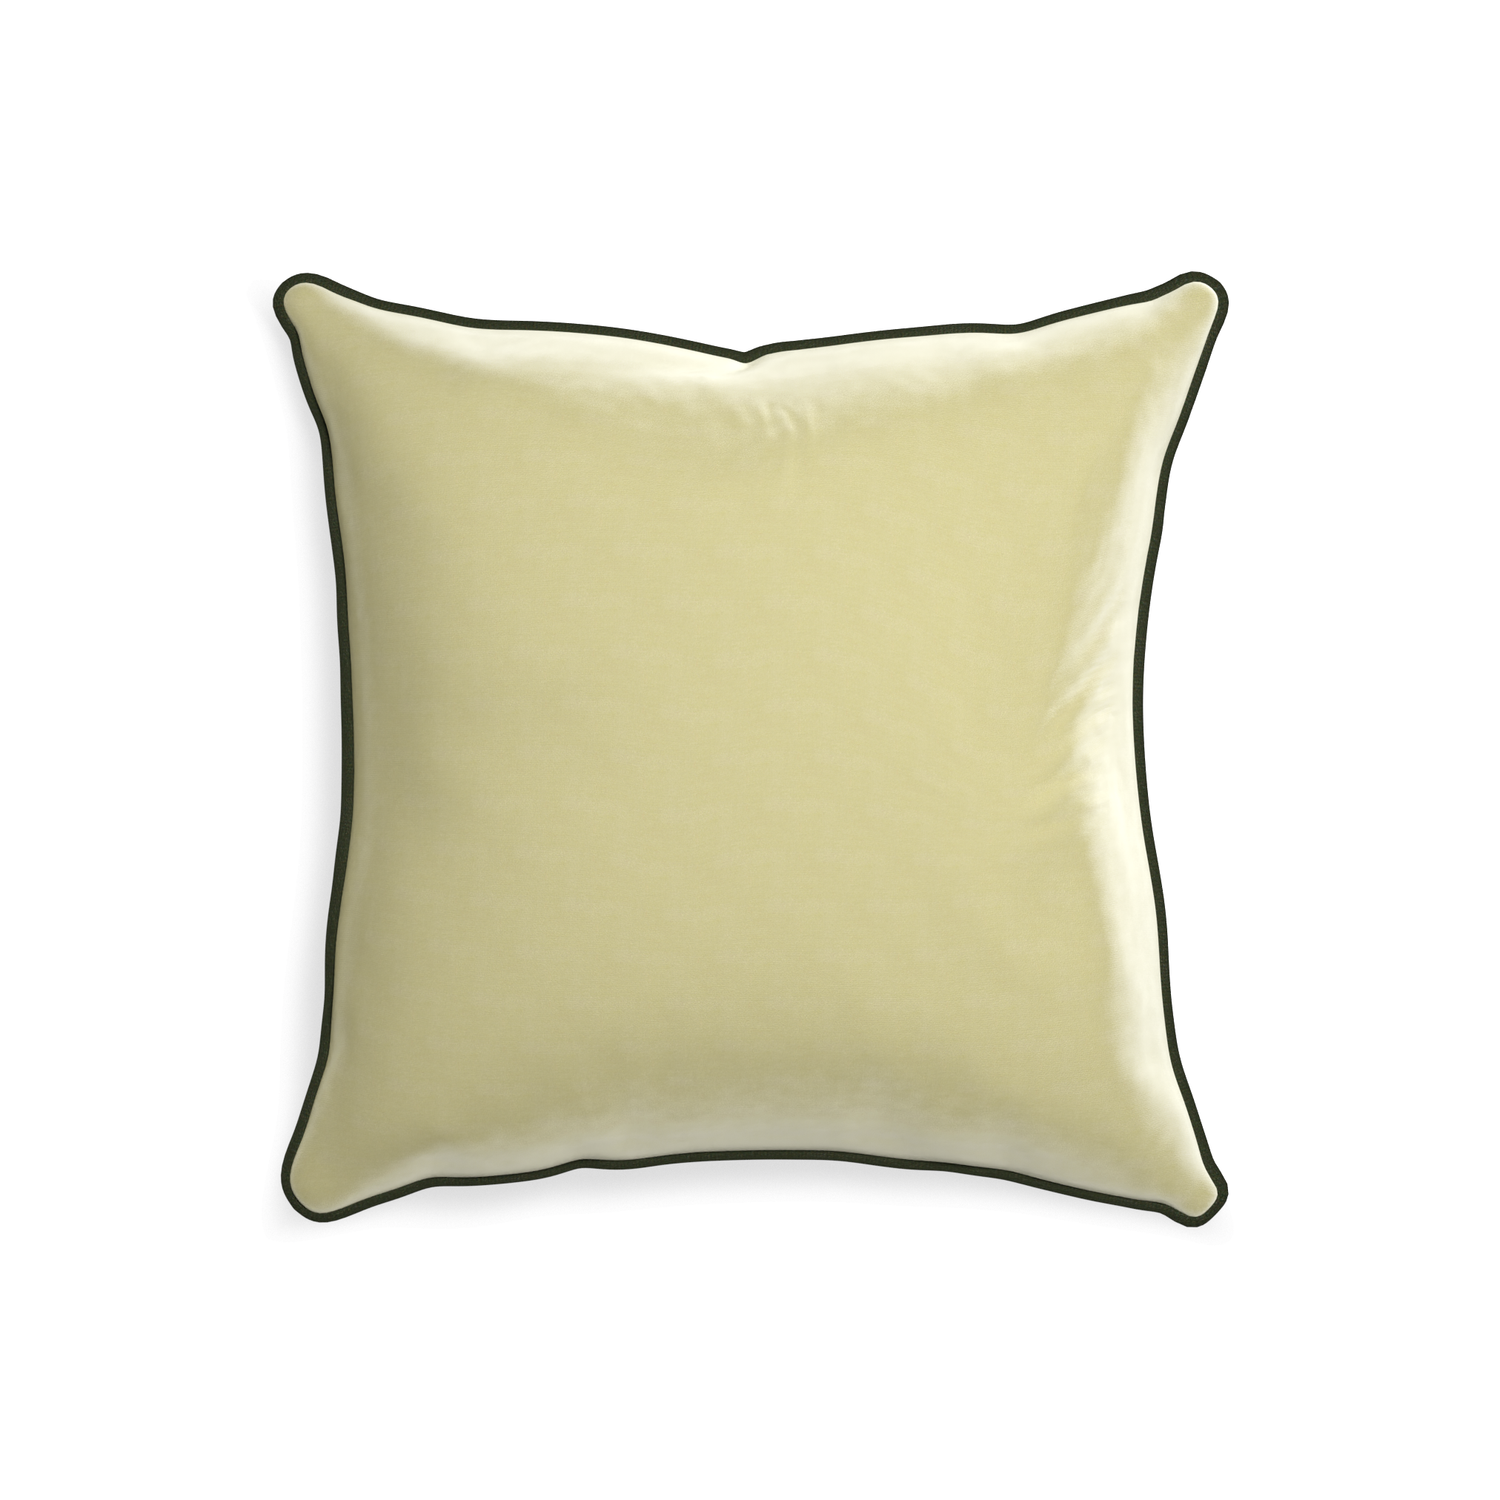 square light green velvet pillow with fern green piping